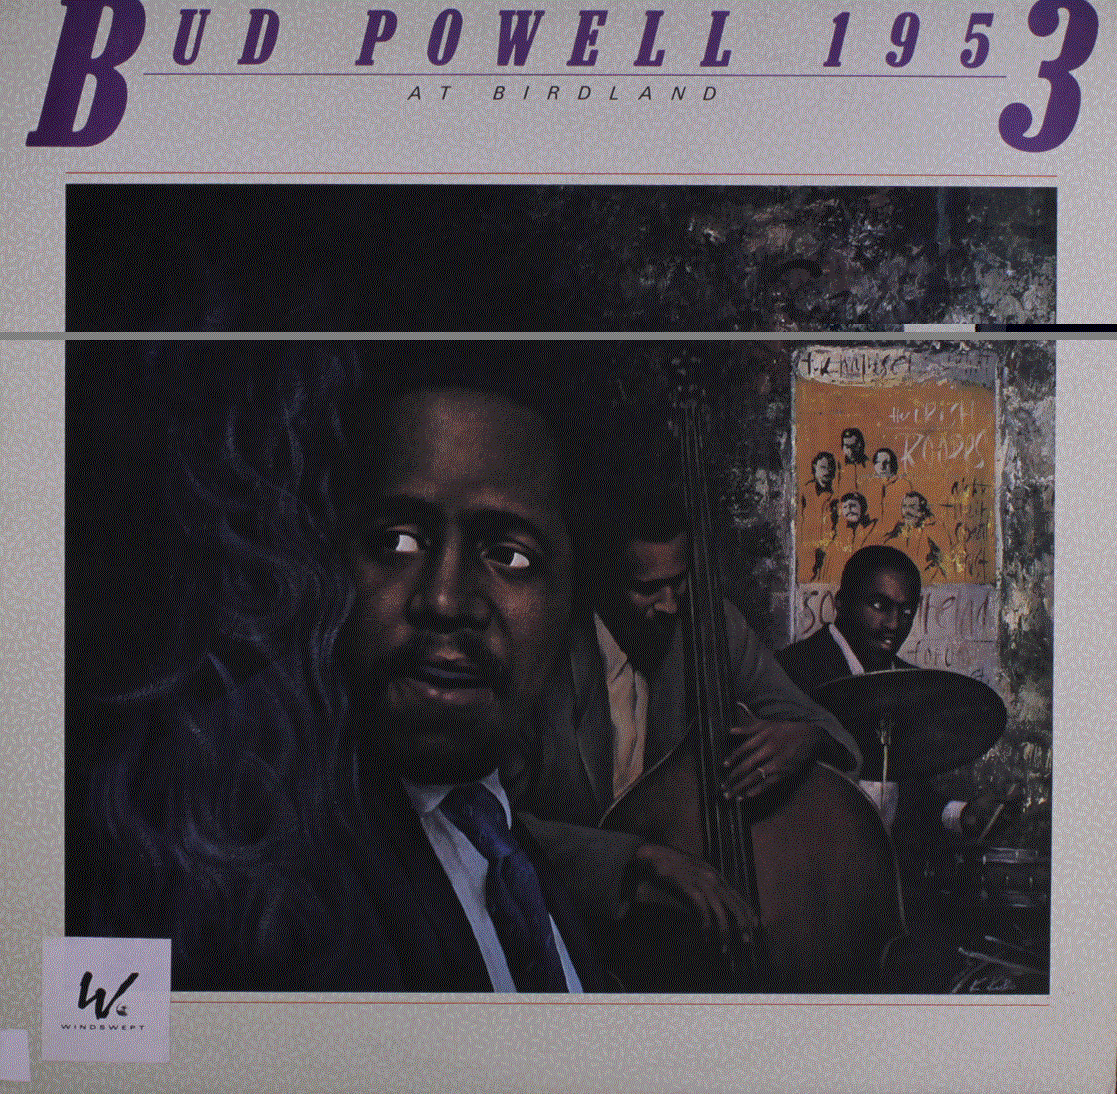 BUD POWELL - Bud Powell 1953 At Birdland cover 